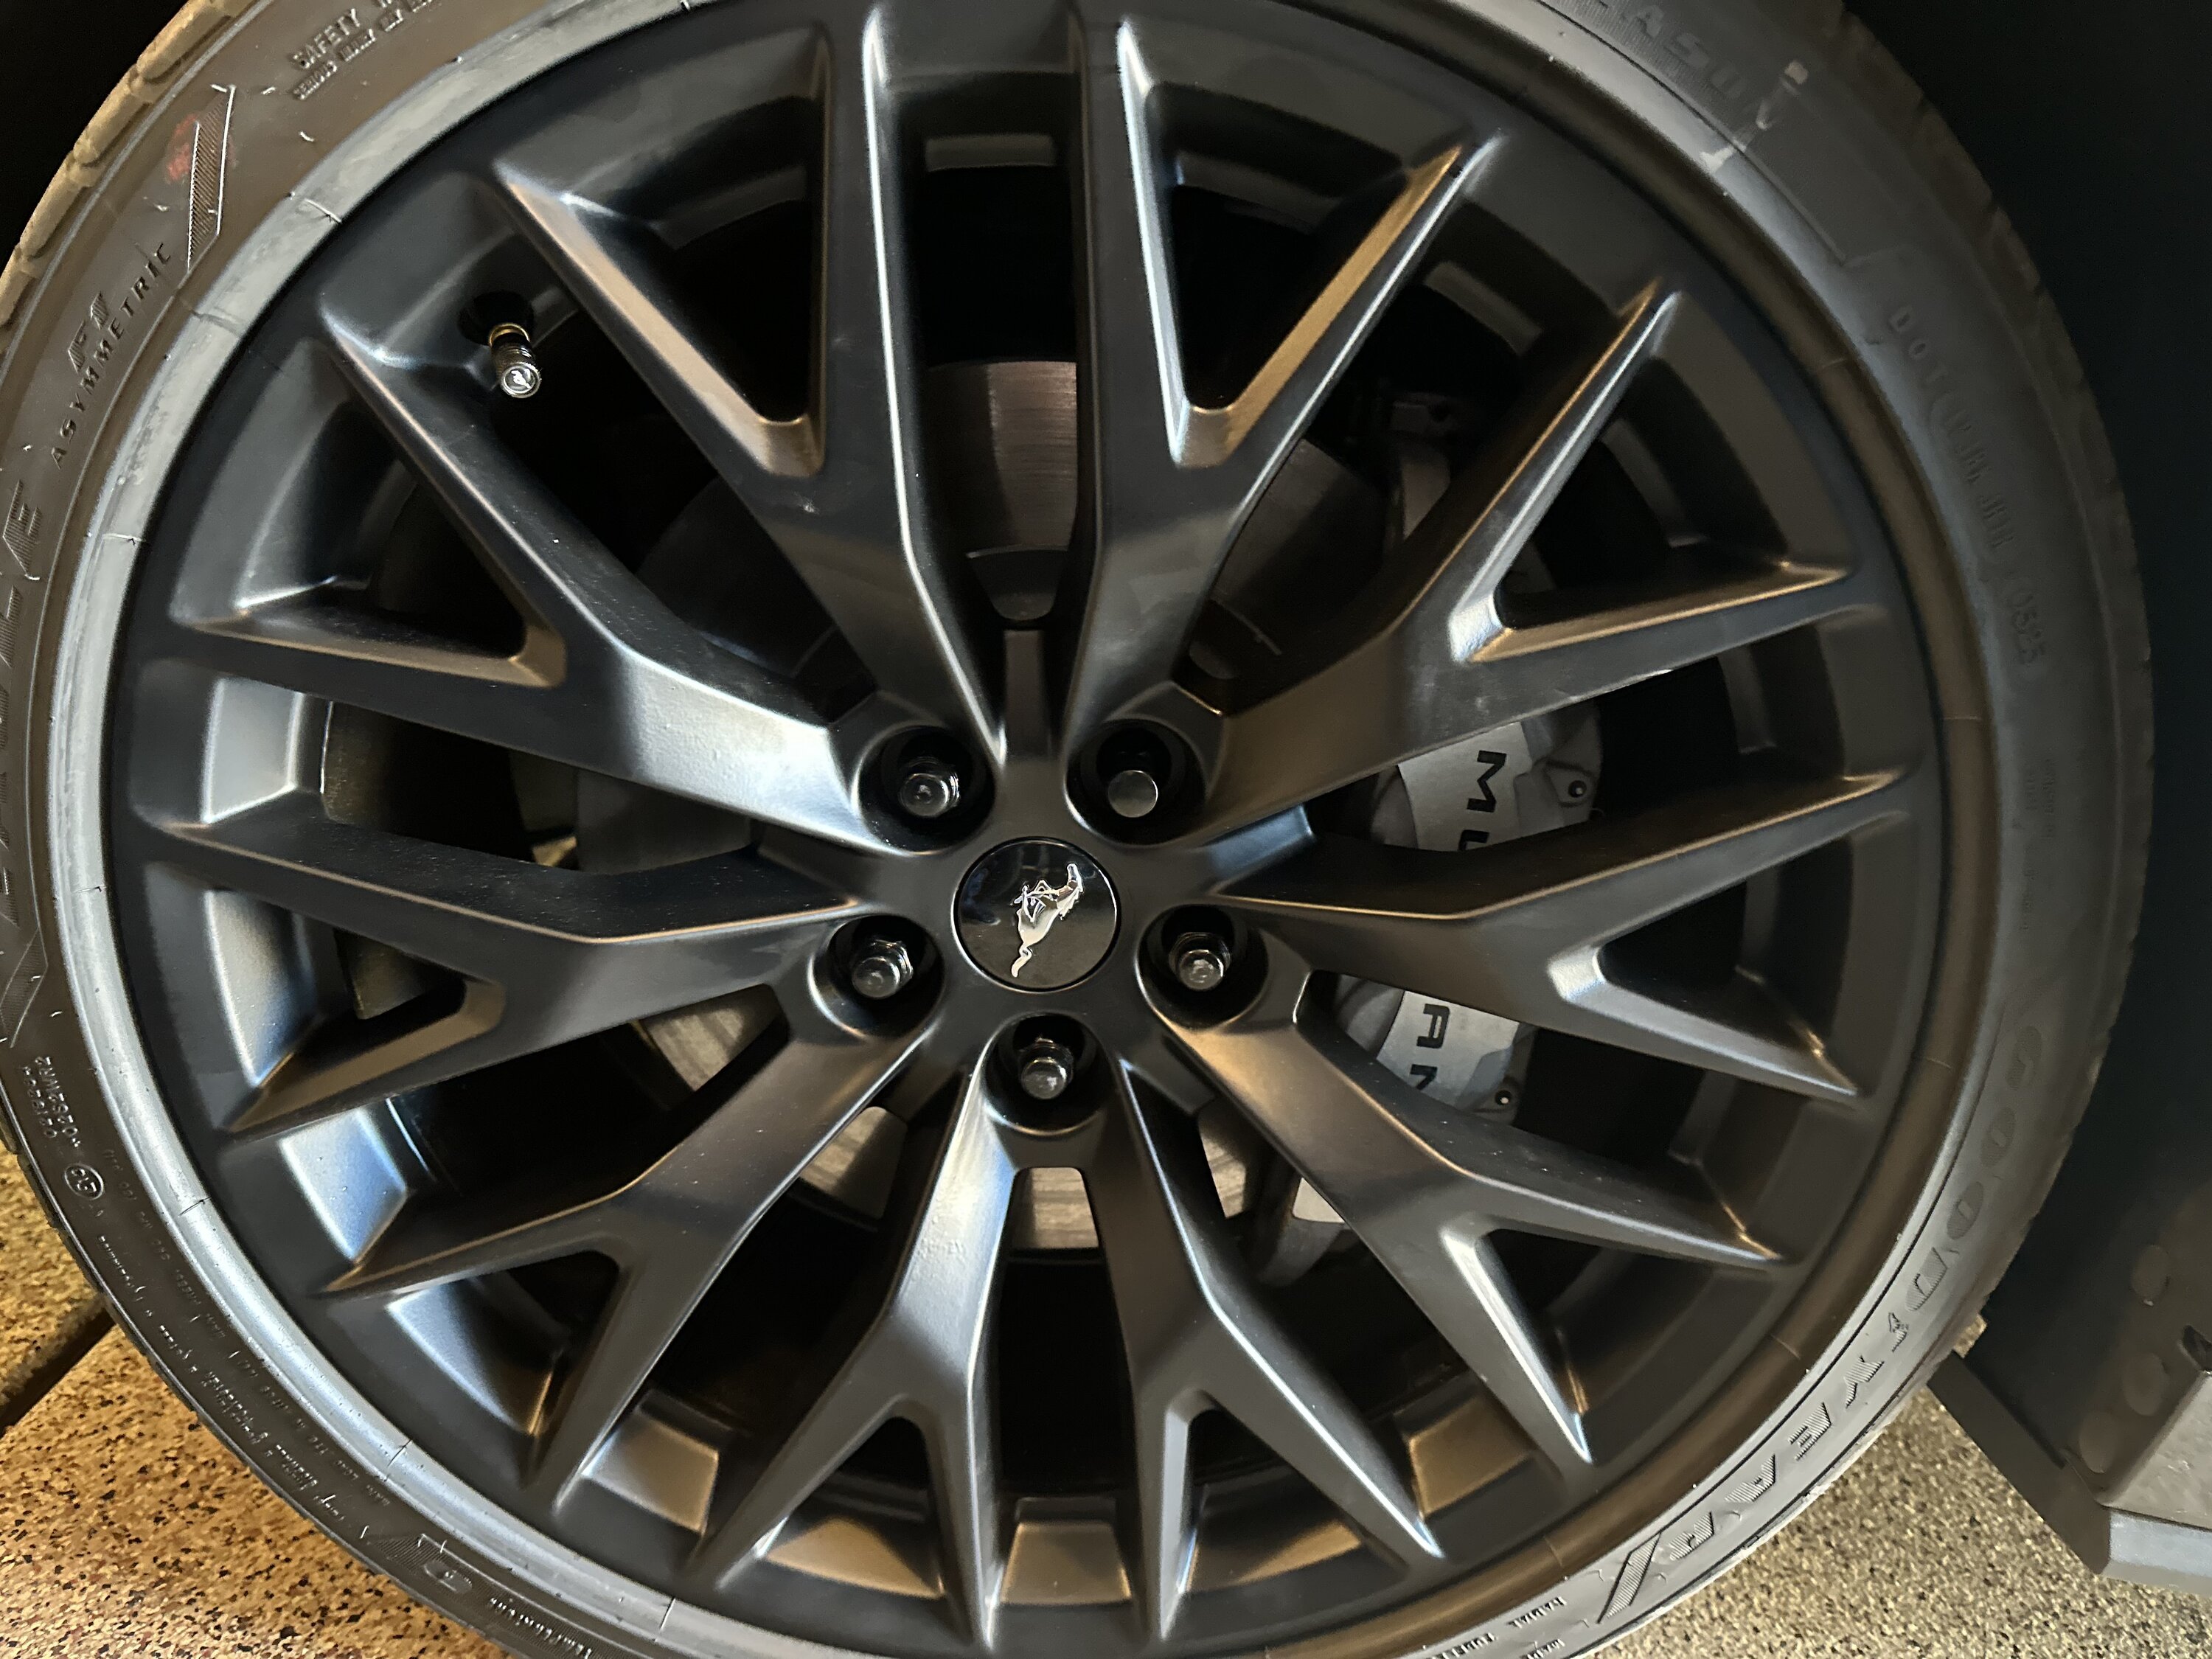 S650 Mustang GT Premium Wheels are Disgusting Powder Coated Wheels